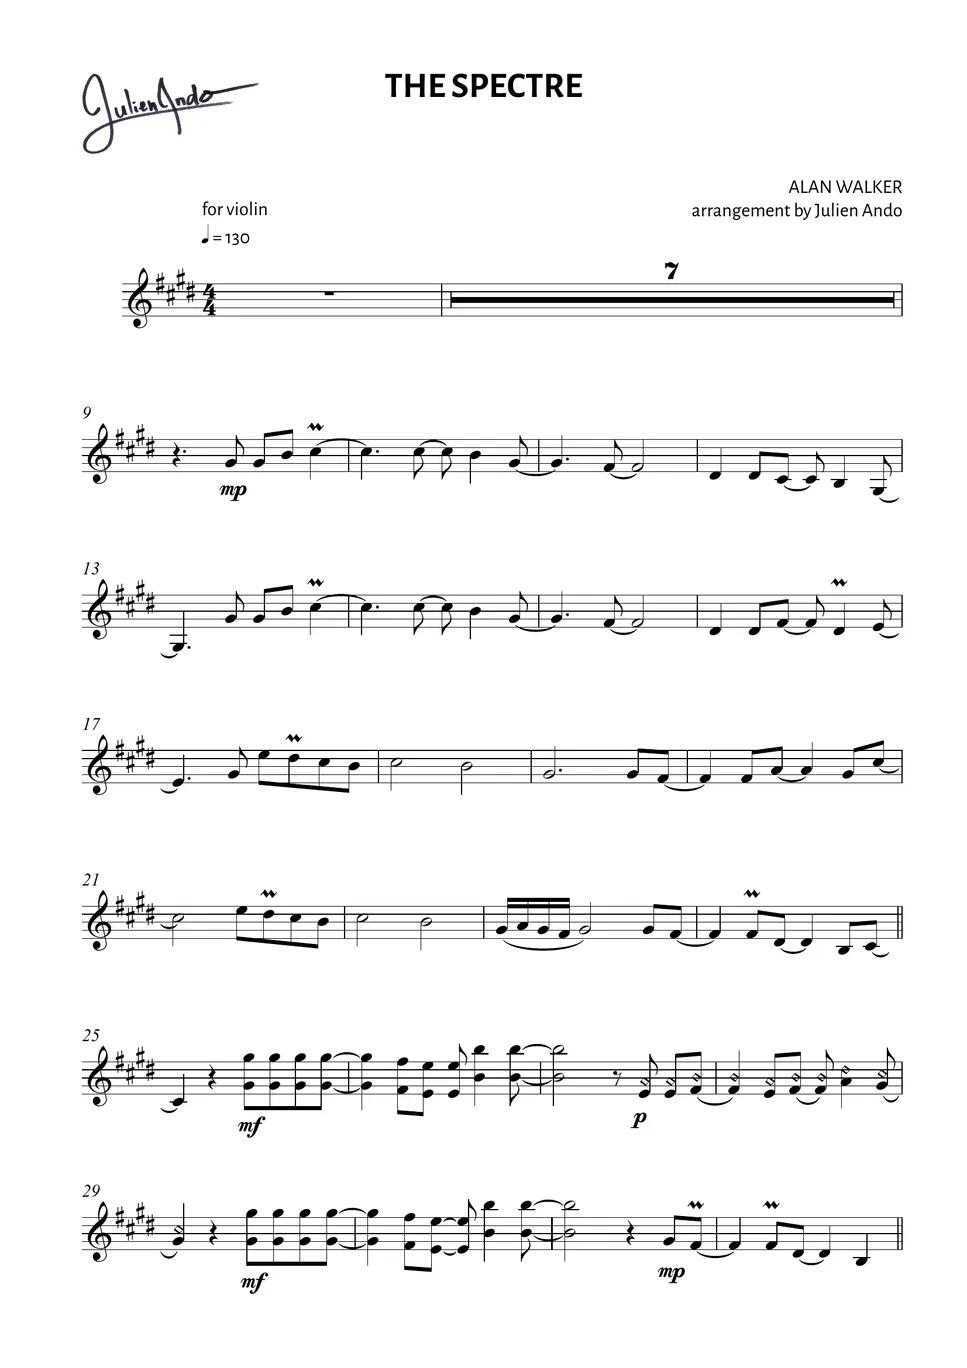 alan walker spectre partitura violin - What type of music is Spectre by Alan Walker